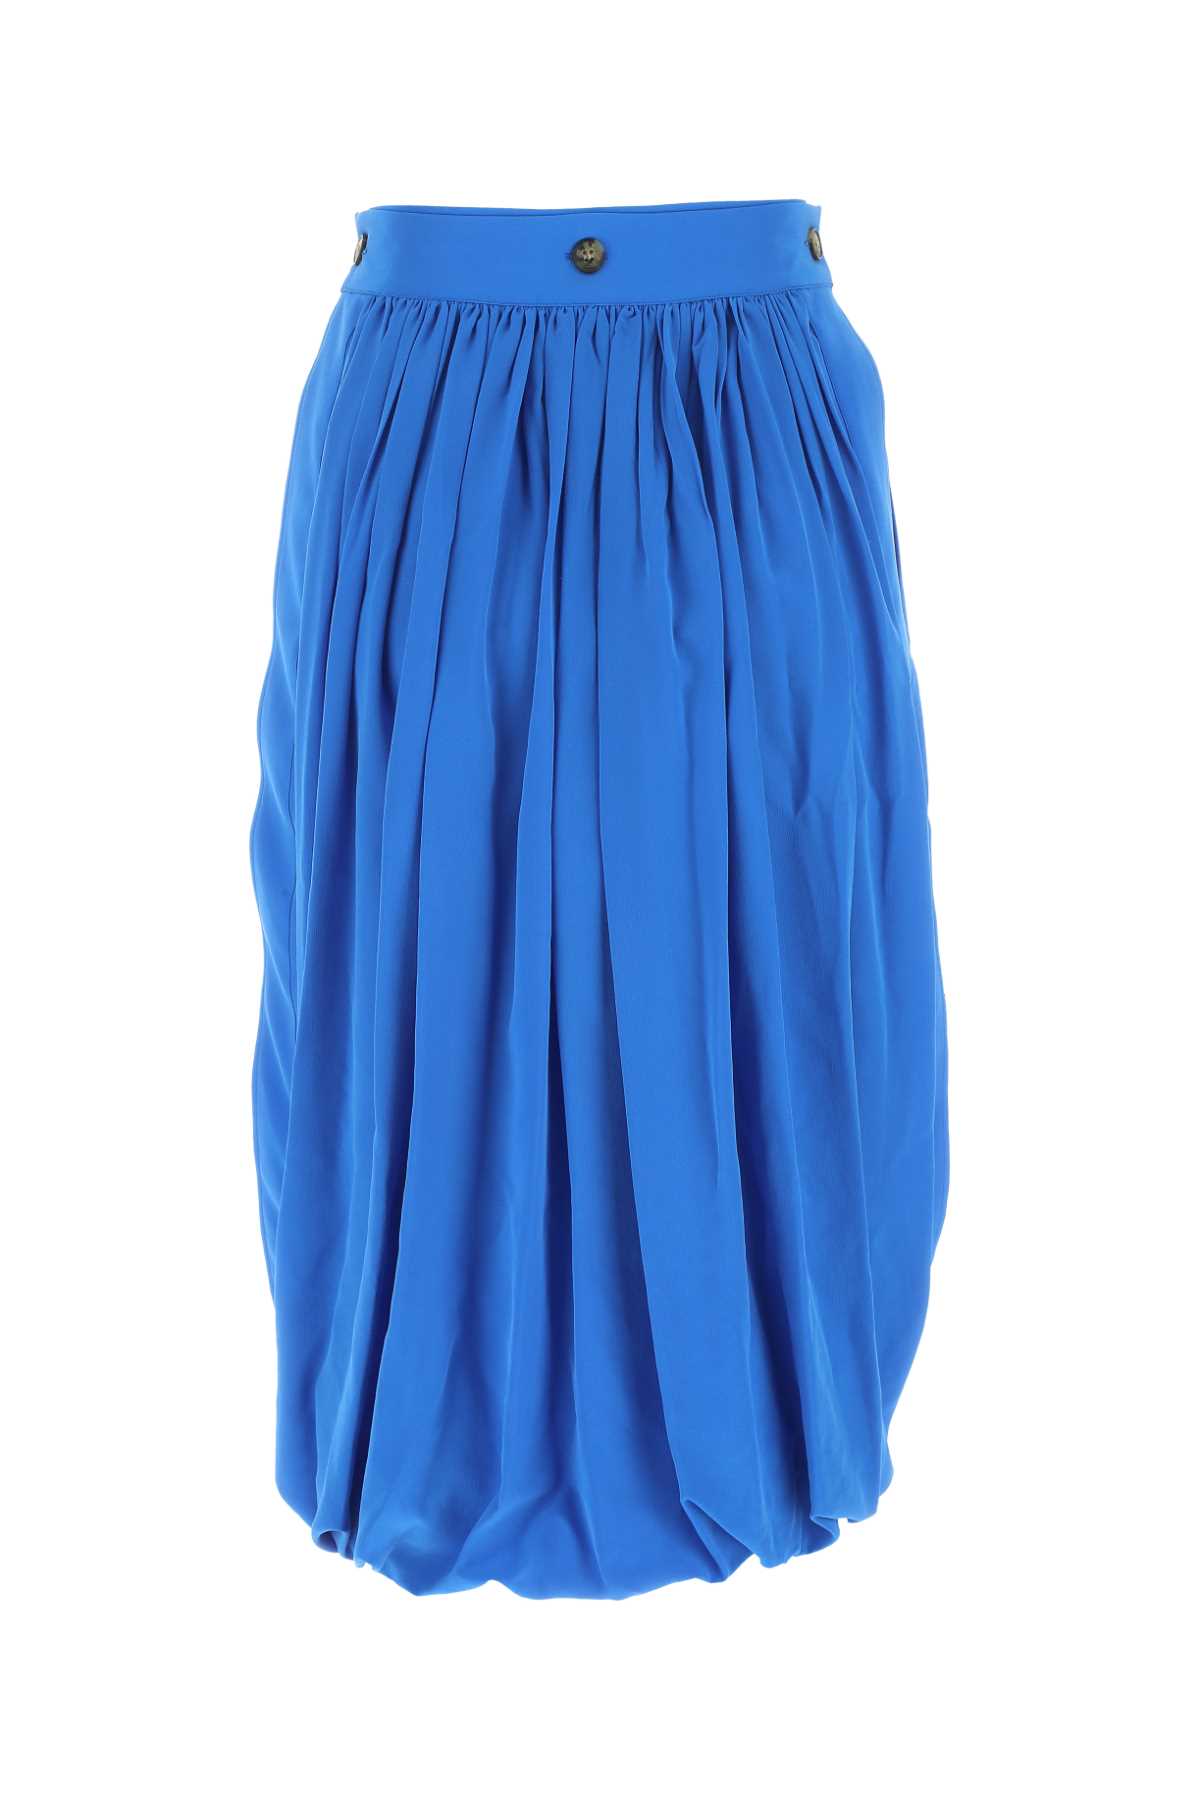 Quira Light-blue Crepe Flip It Up Skirt In Q0065